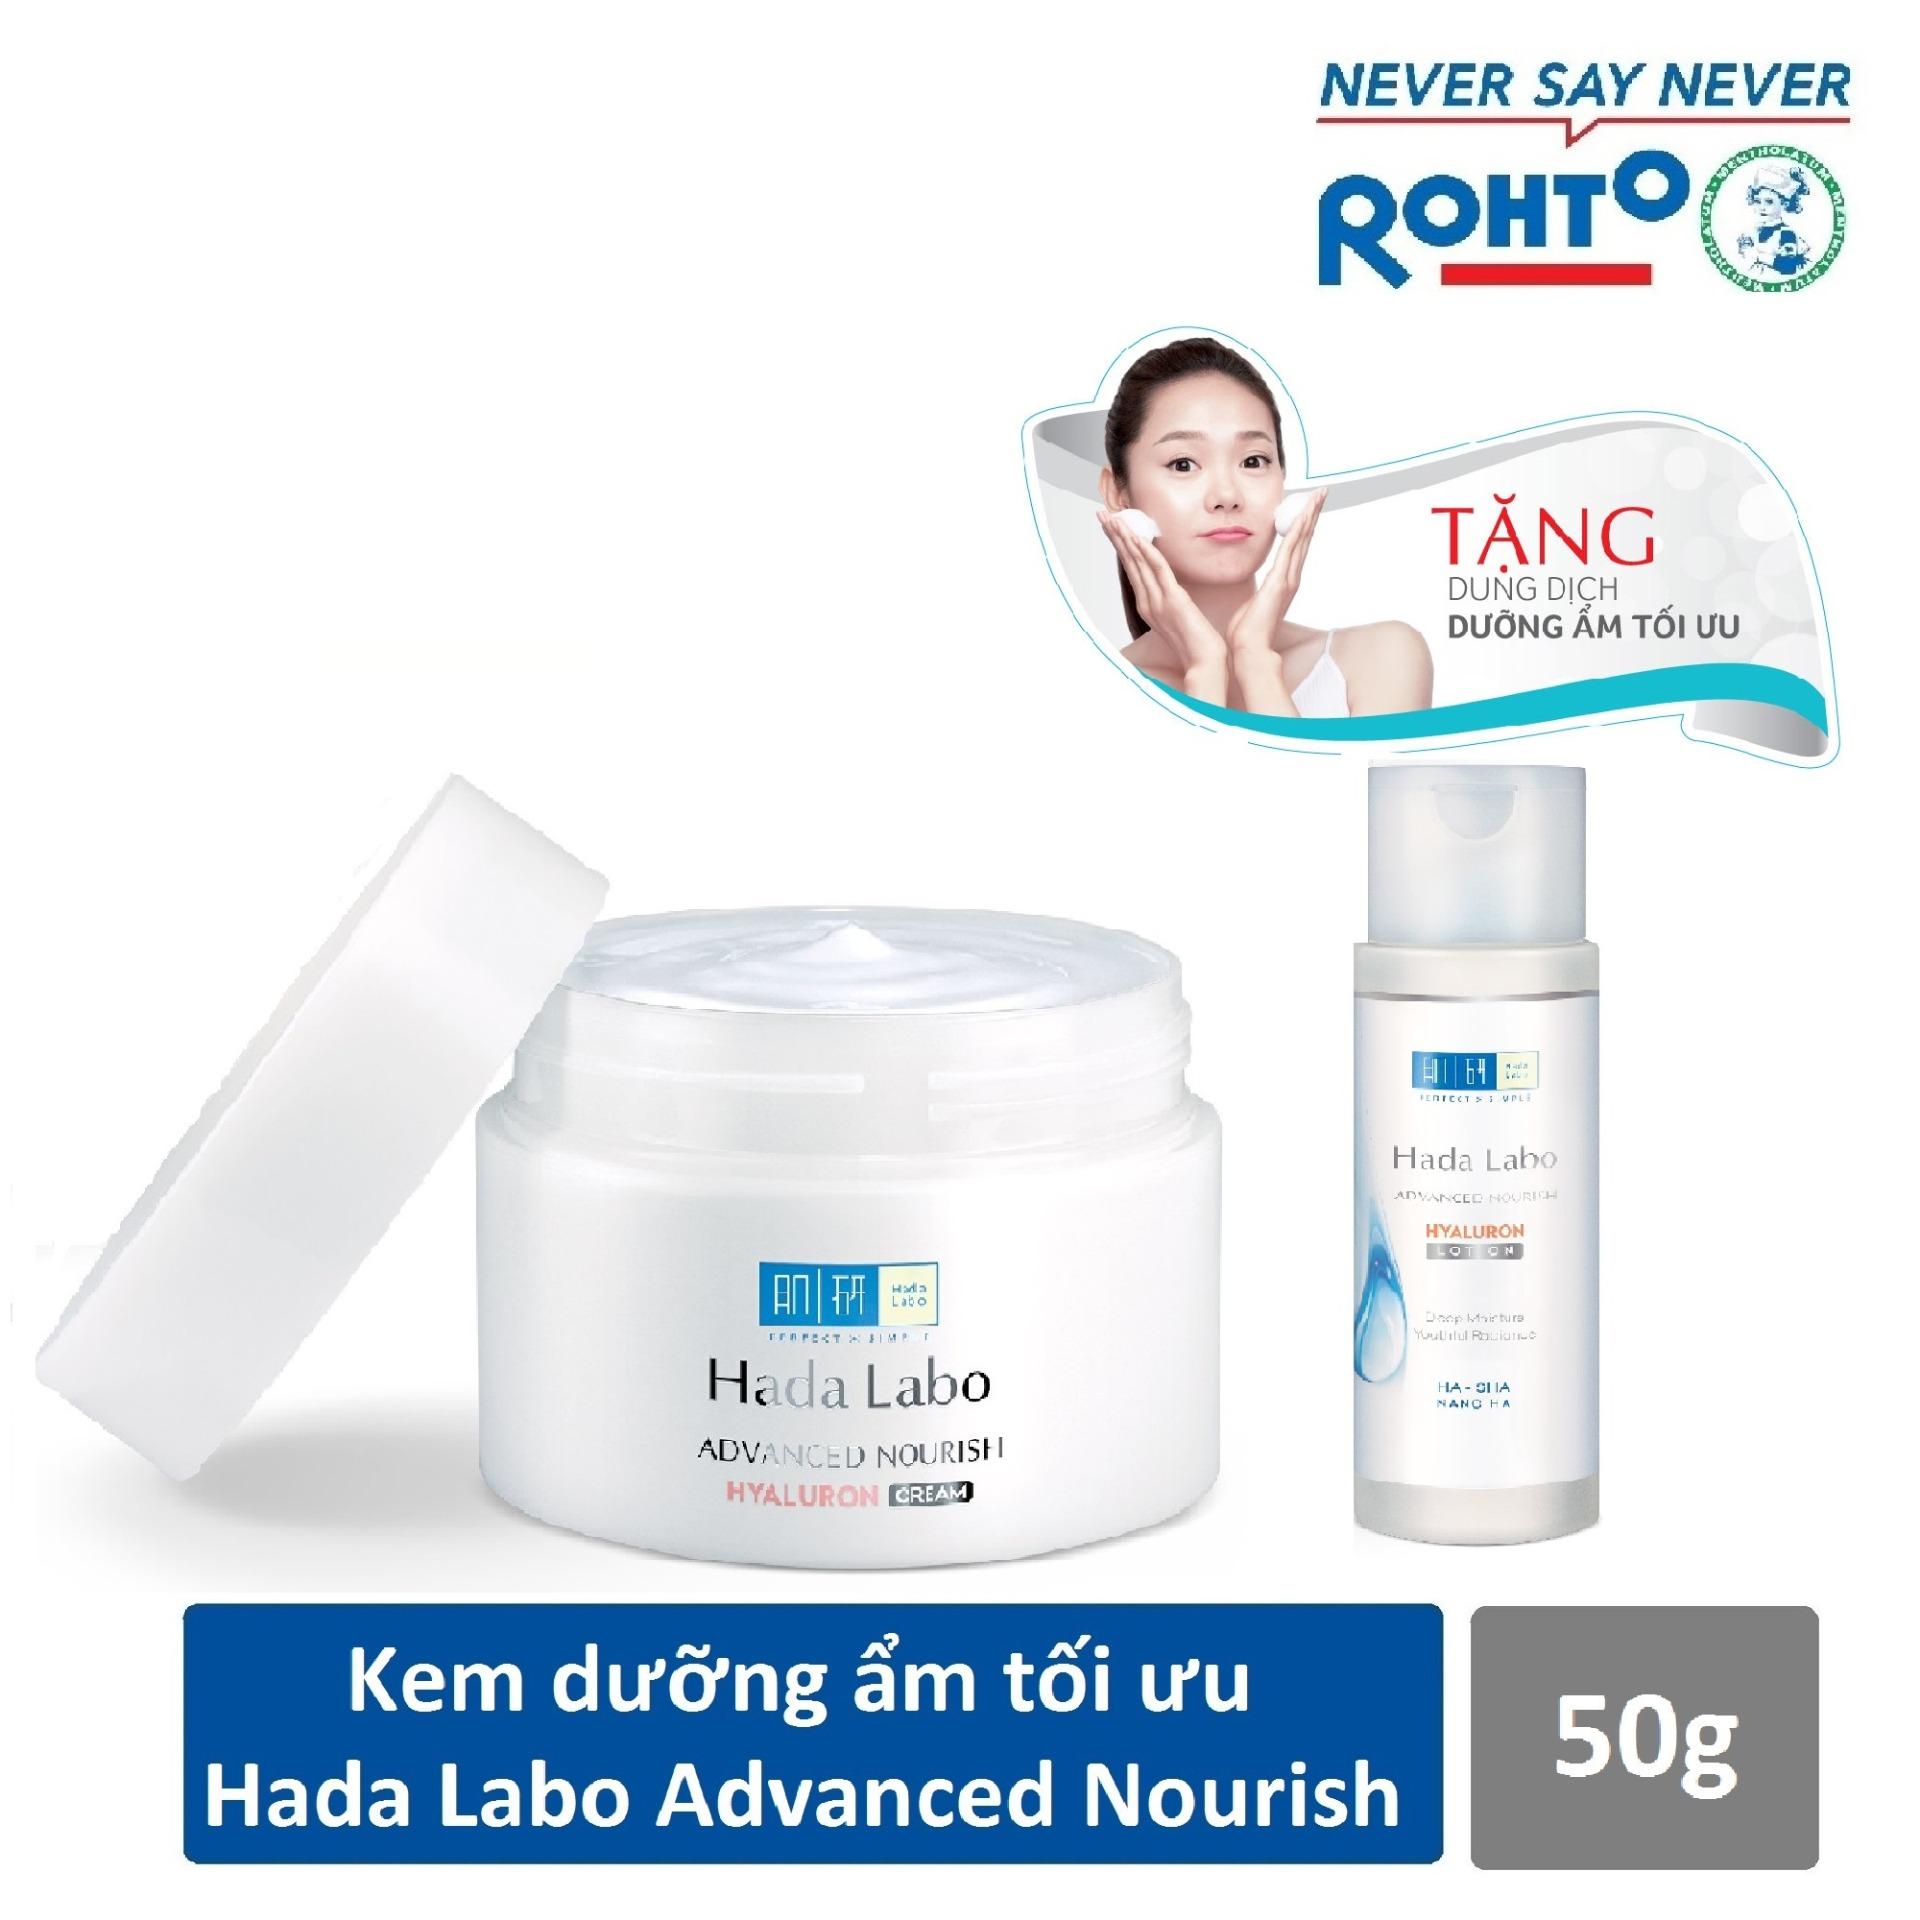 Kem dưỡng ẩm tối ưu Hada Labo Advanced Nourish Cream 50g + Tặng Dung dịch Hada Labo 40ml